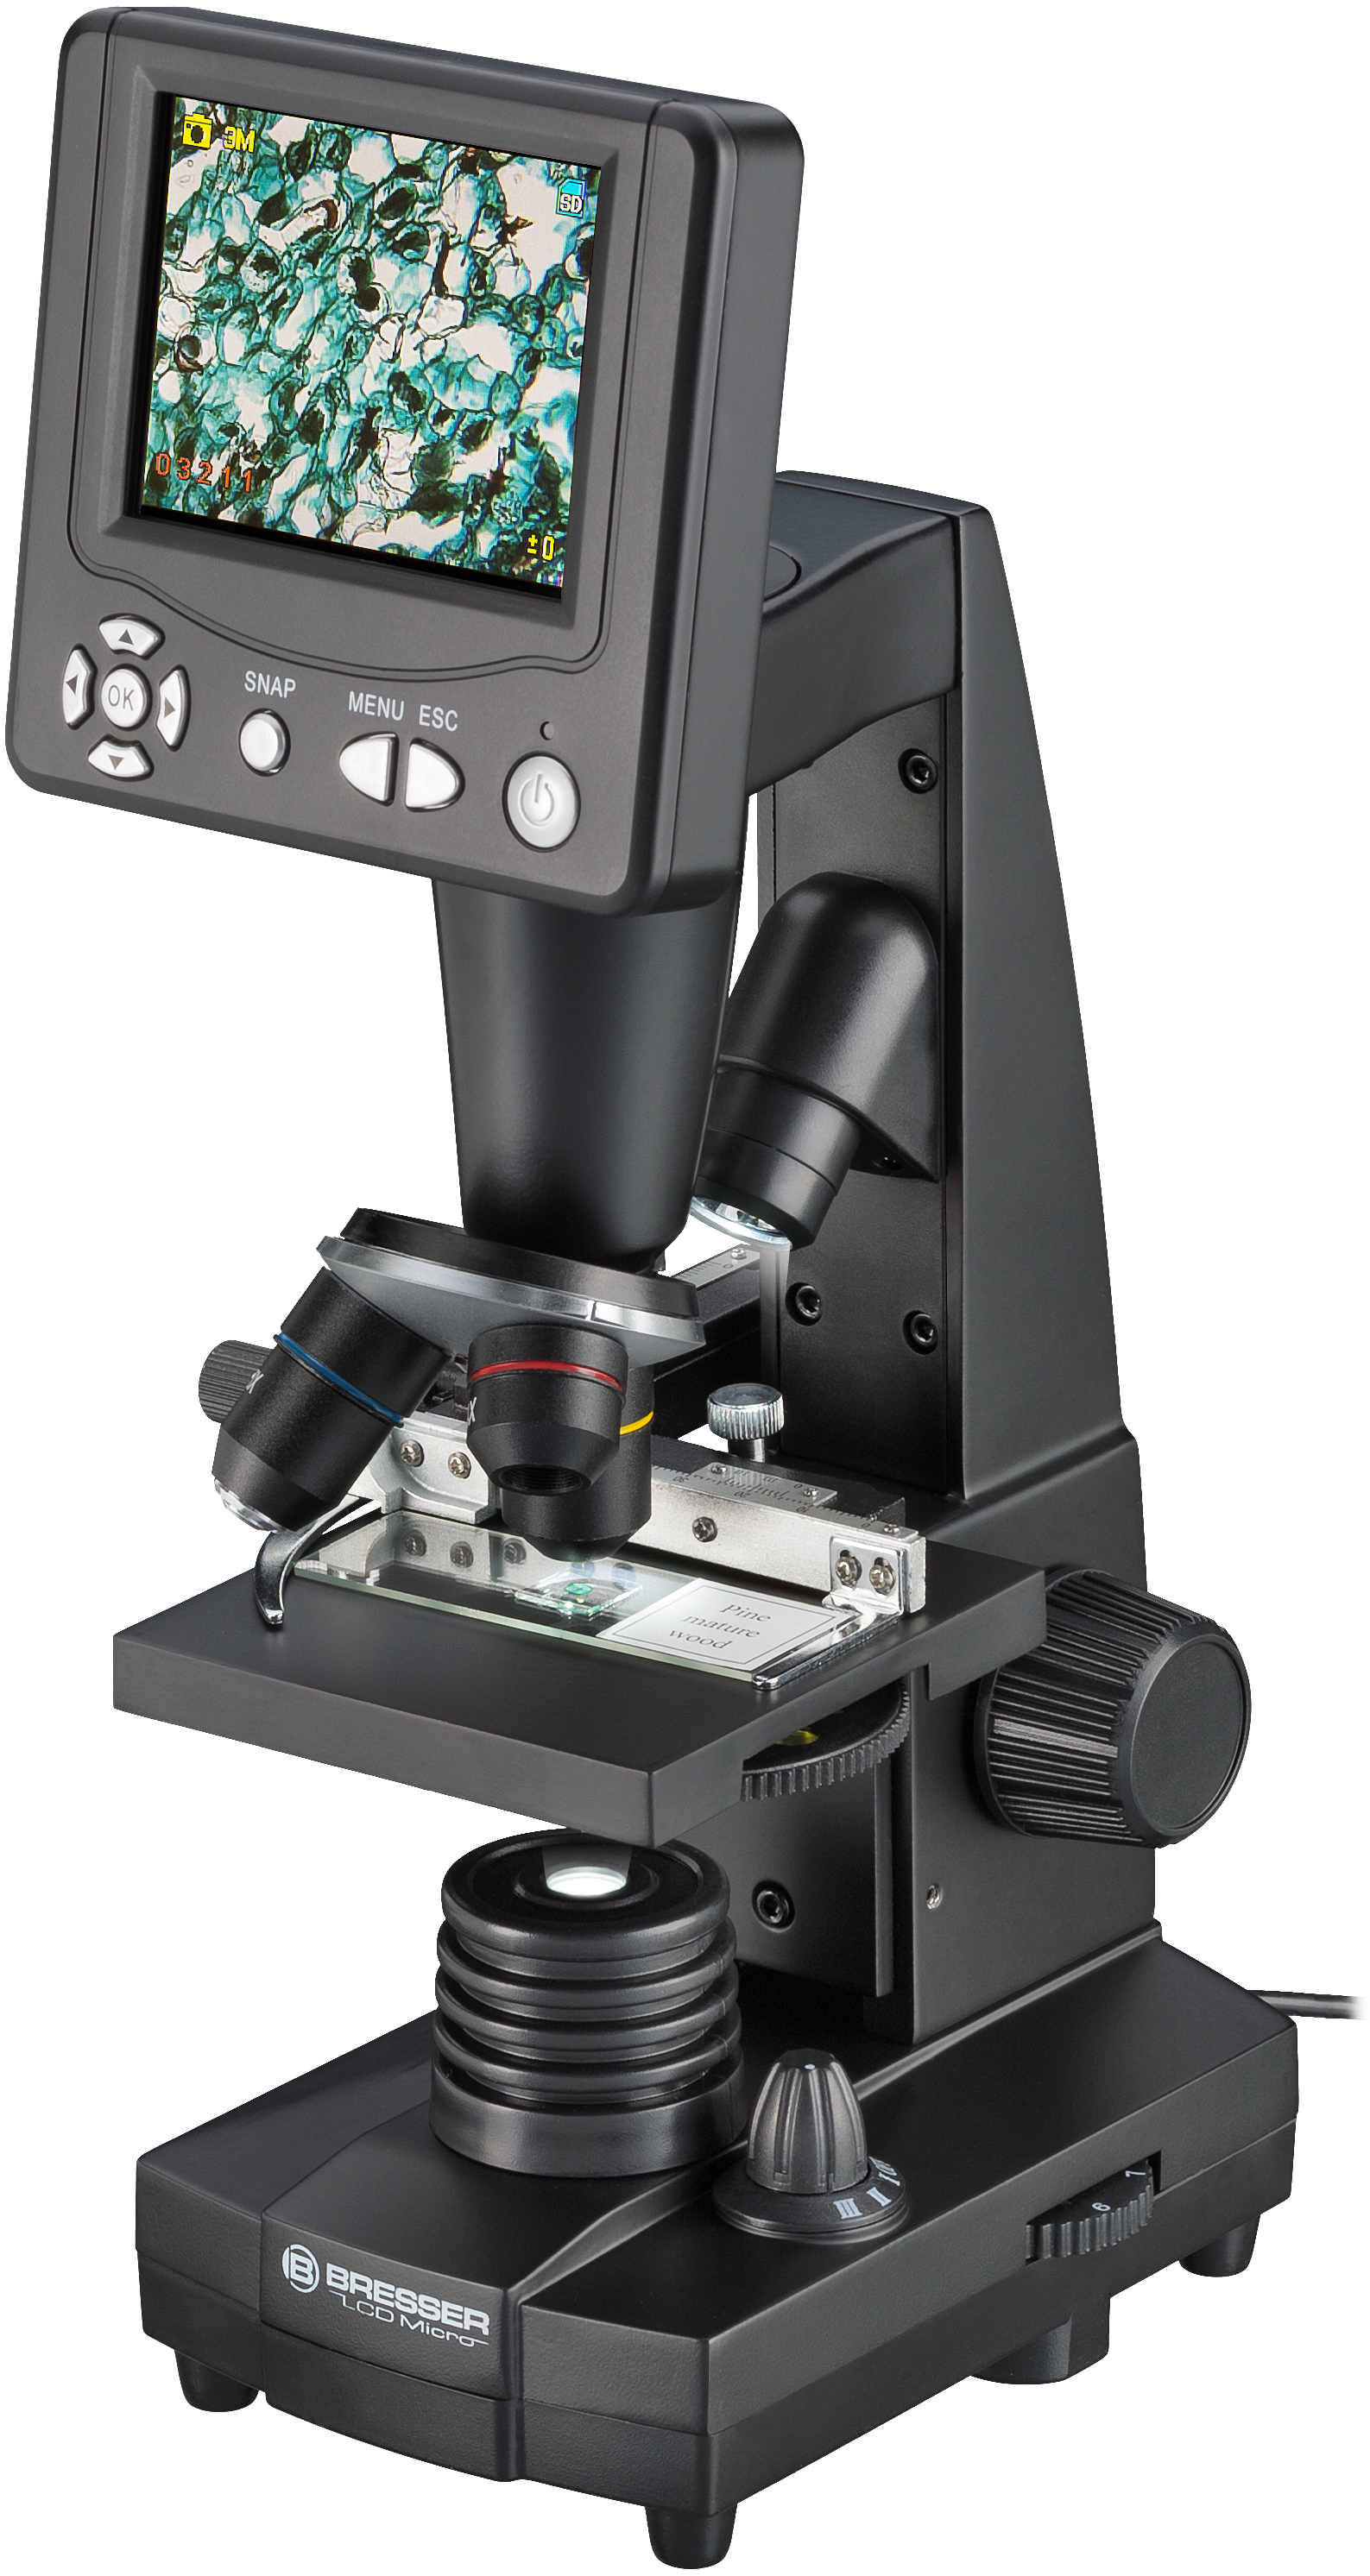 cooling tech digital microscope software windows 10